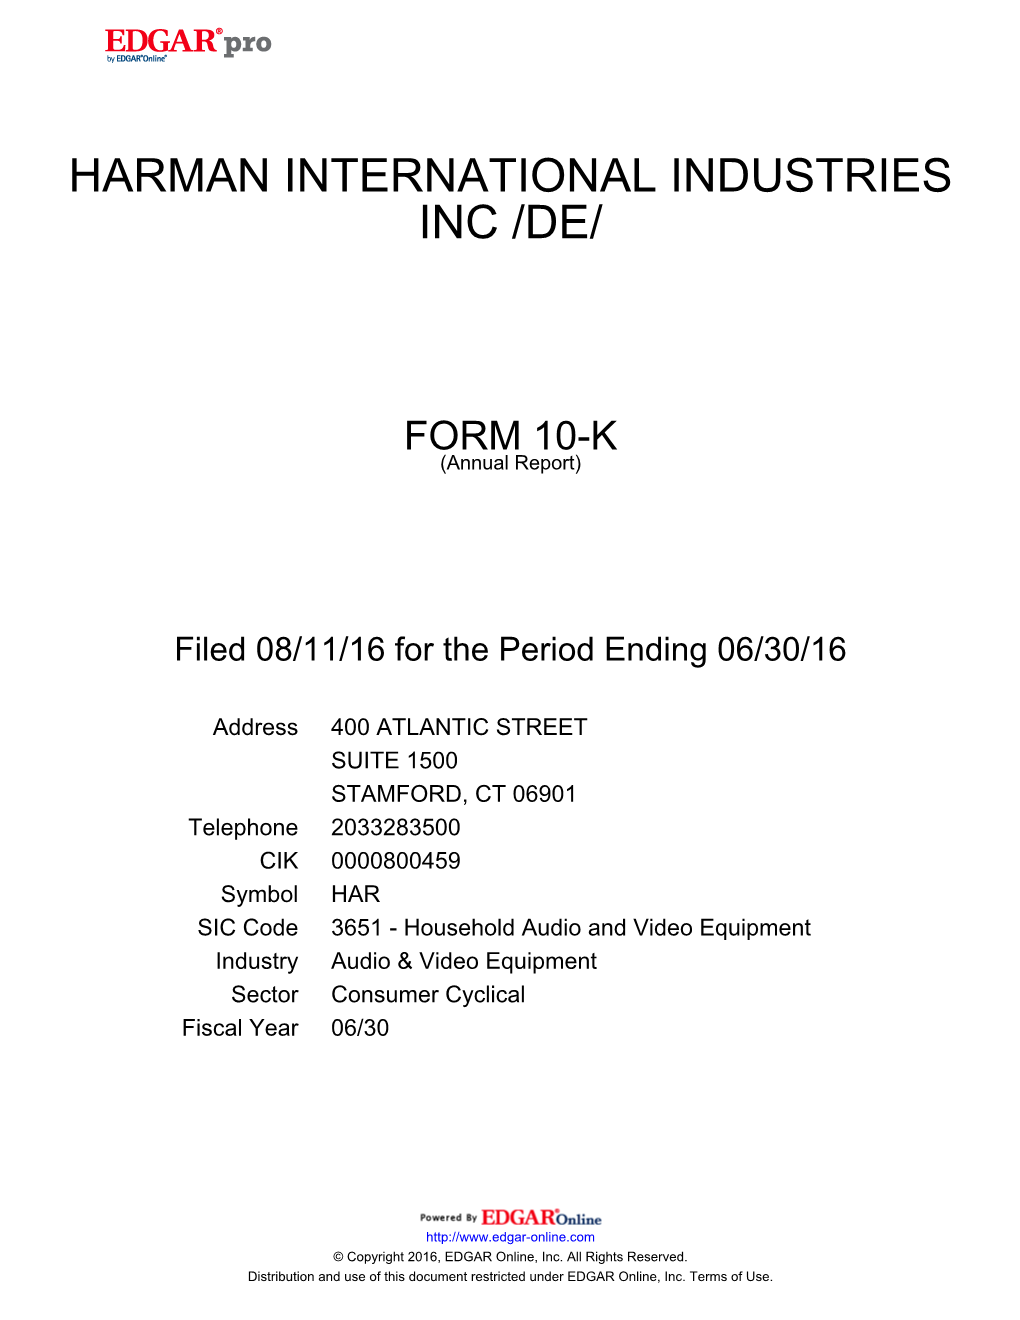 Harman International Industries Inc /De